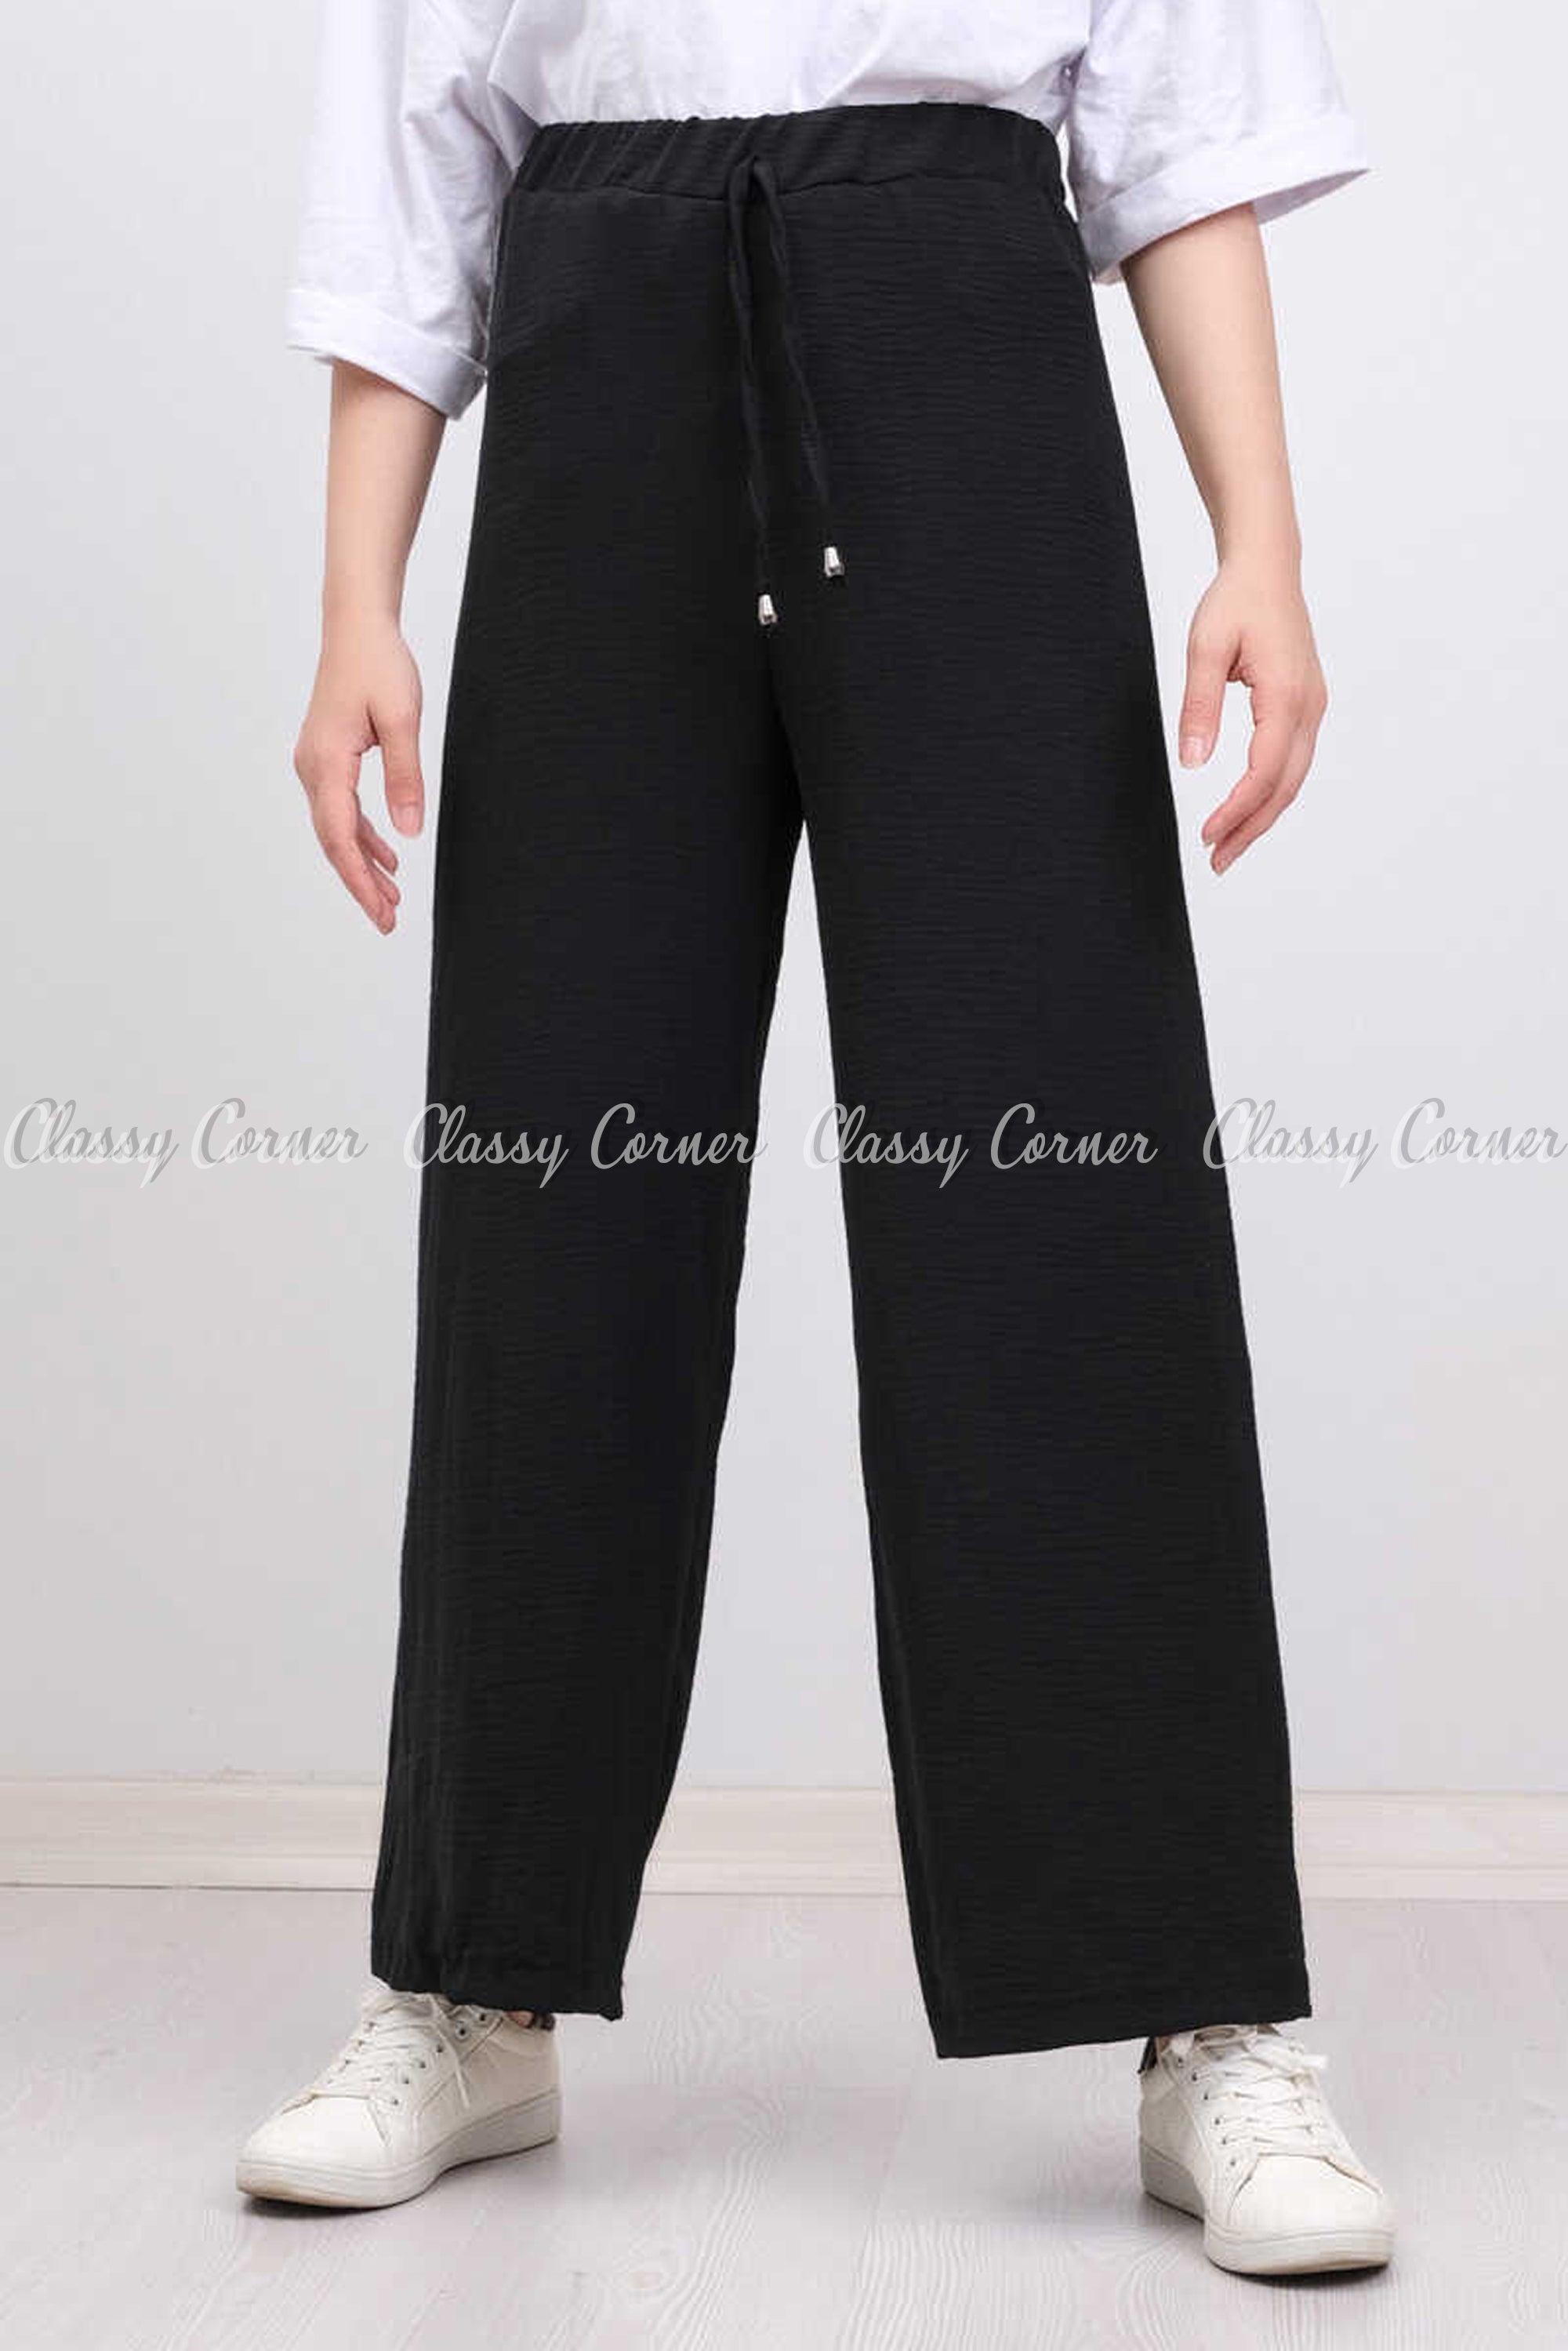 Elastic Waist Black Modest Comfy Pants